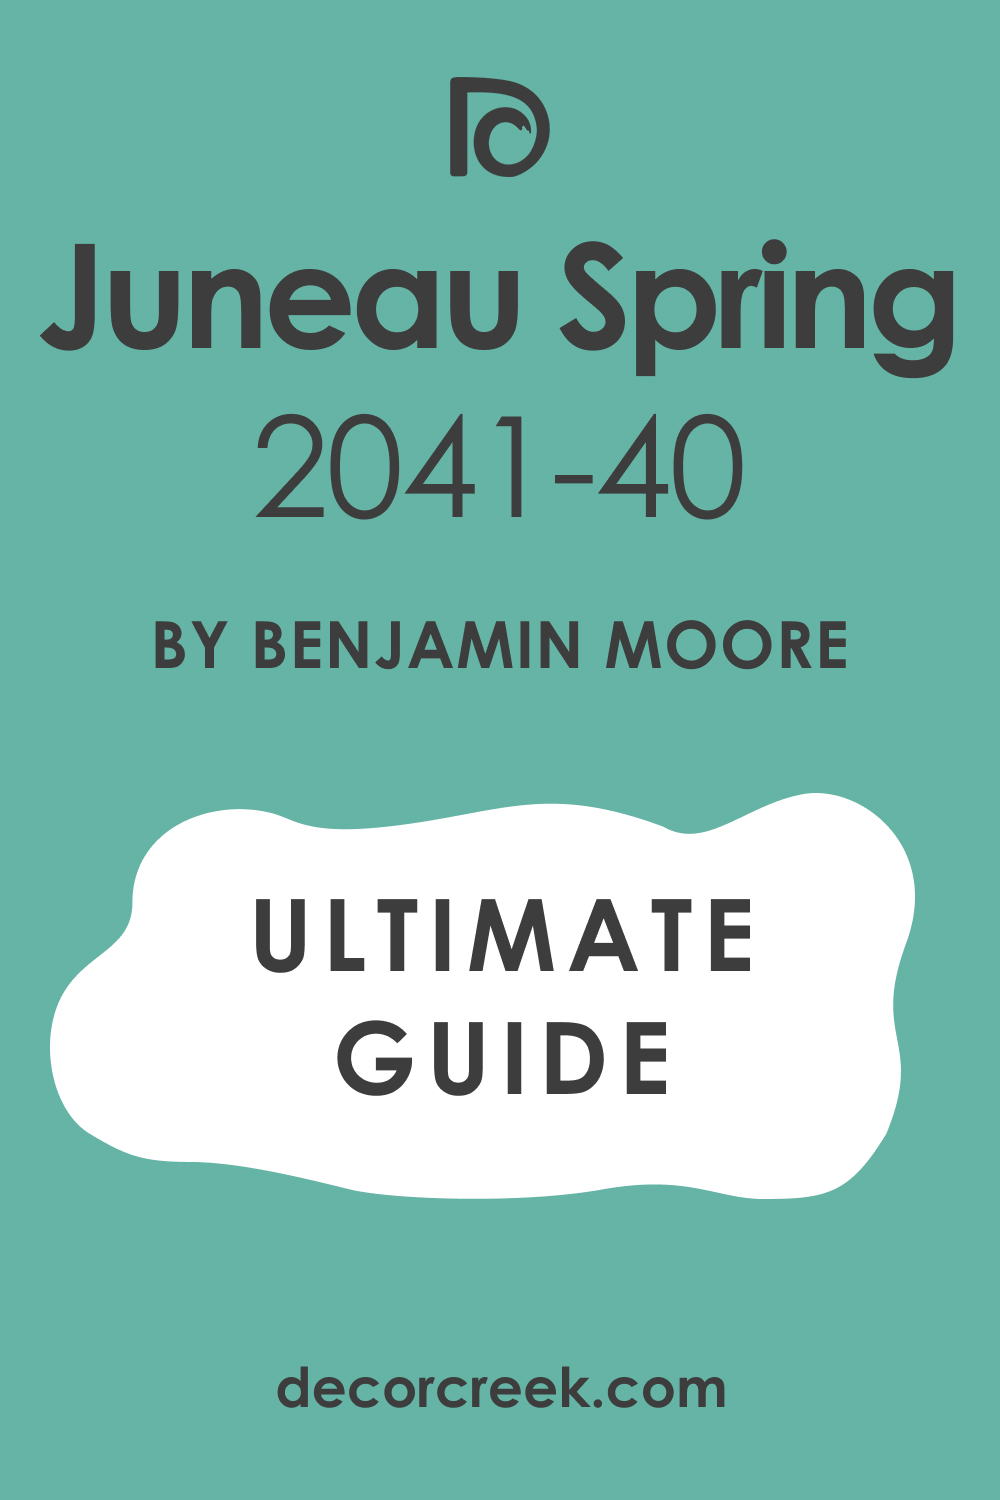 Ultimate Guide of Juneau Spring 2041-40